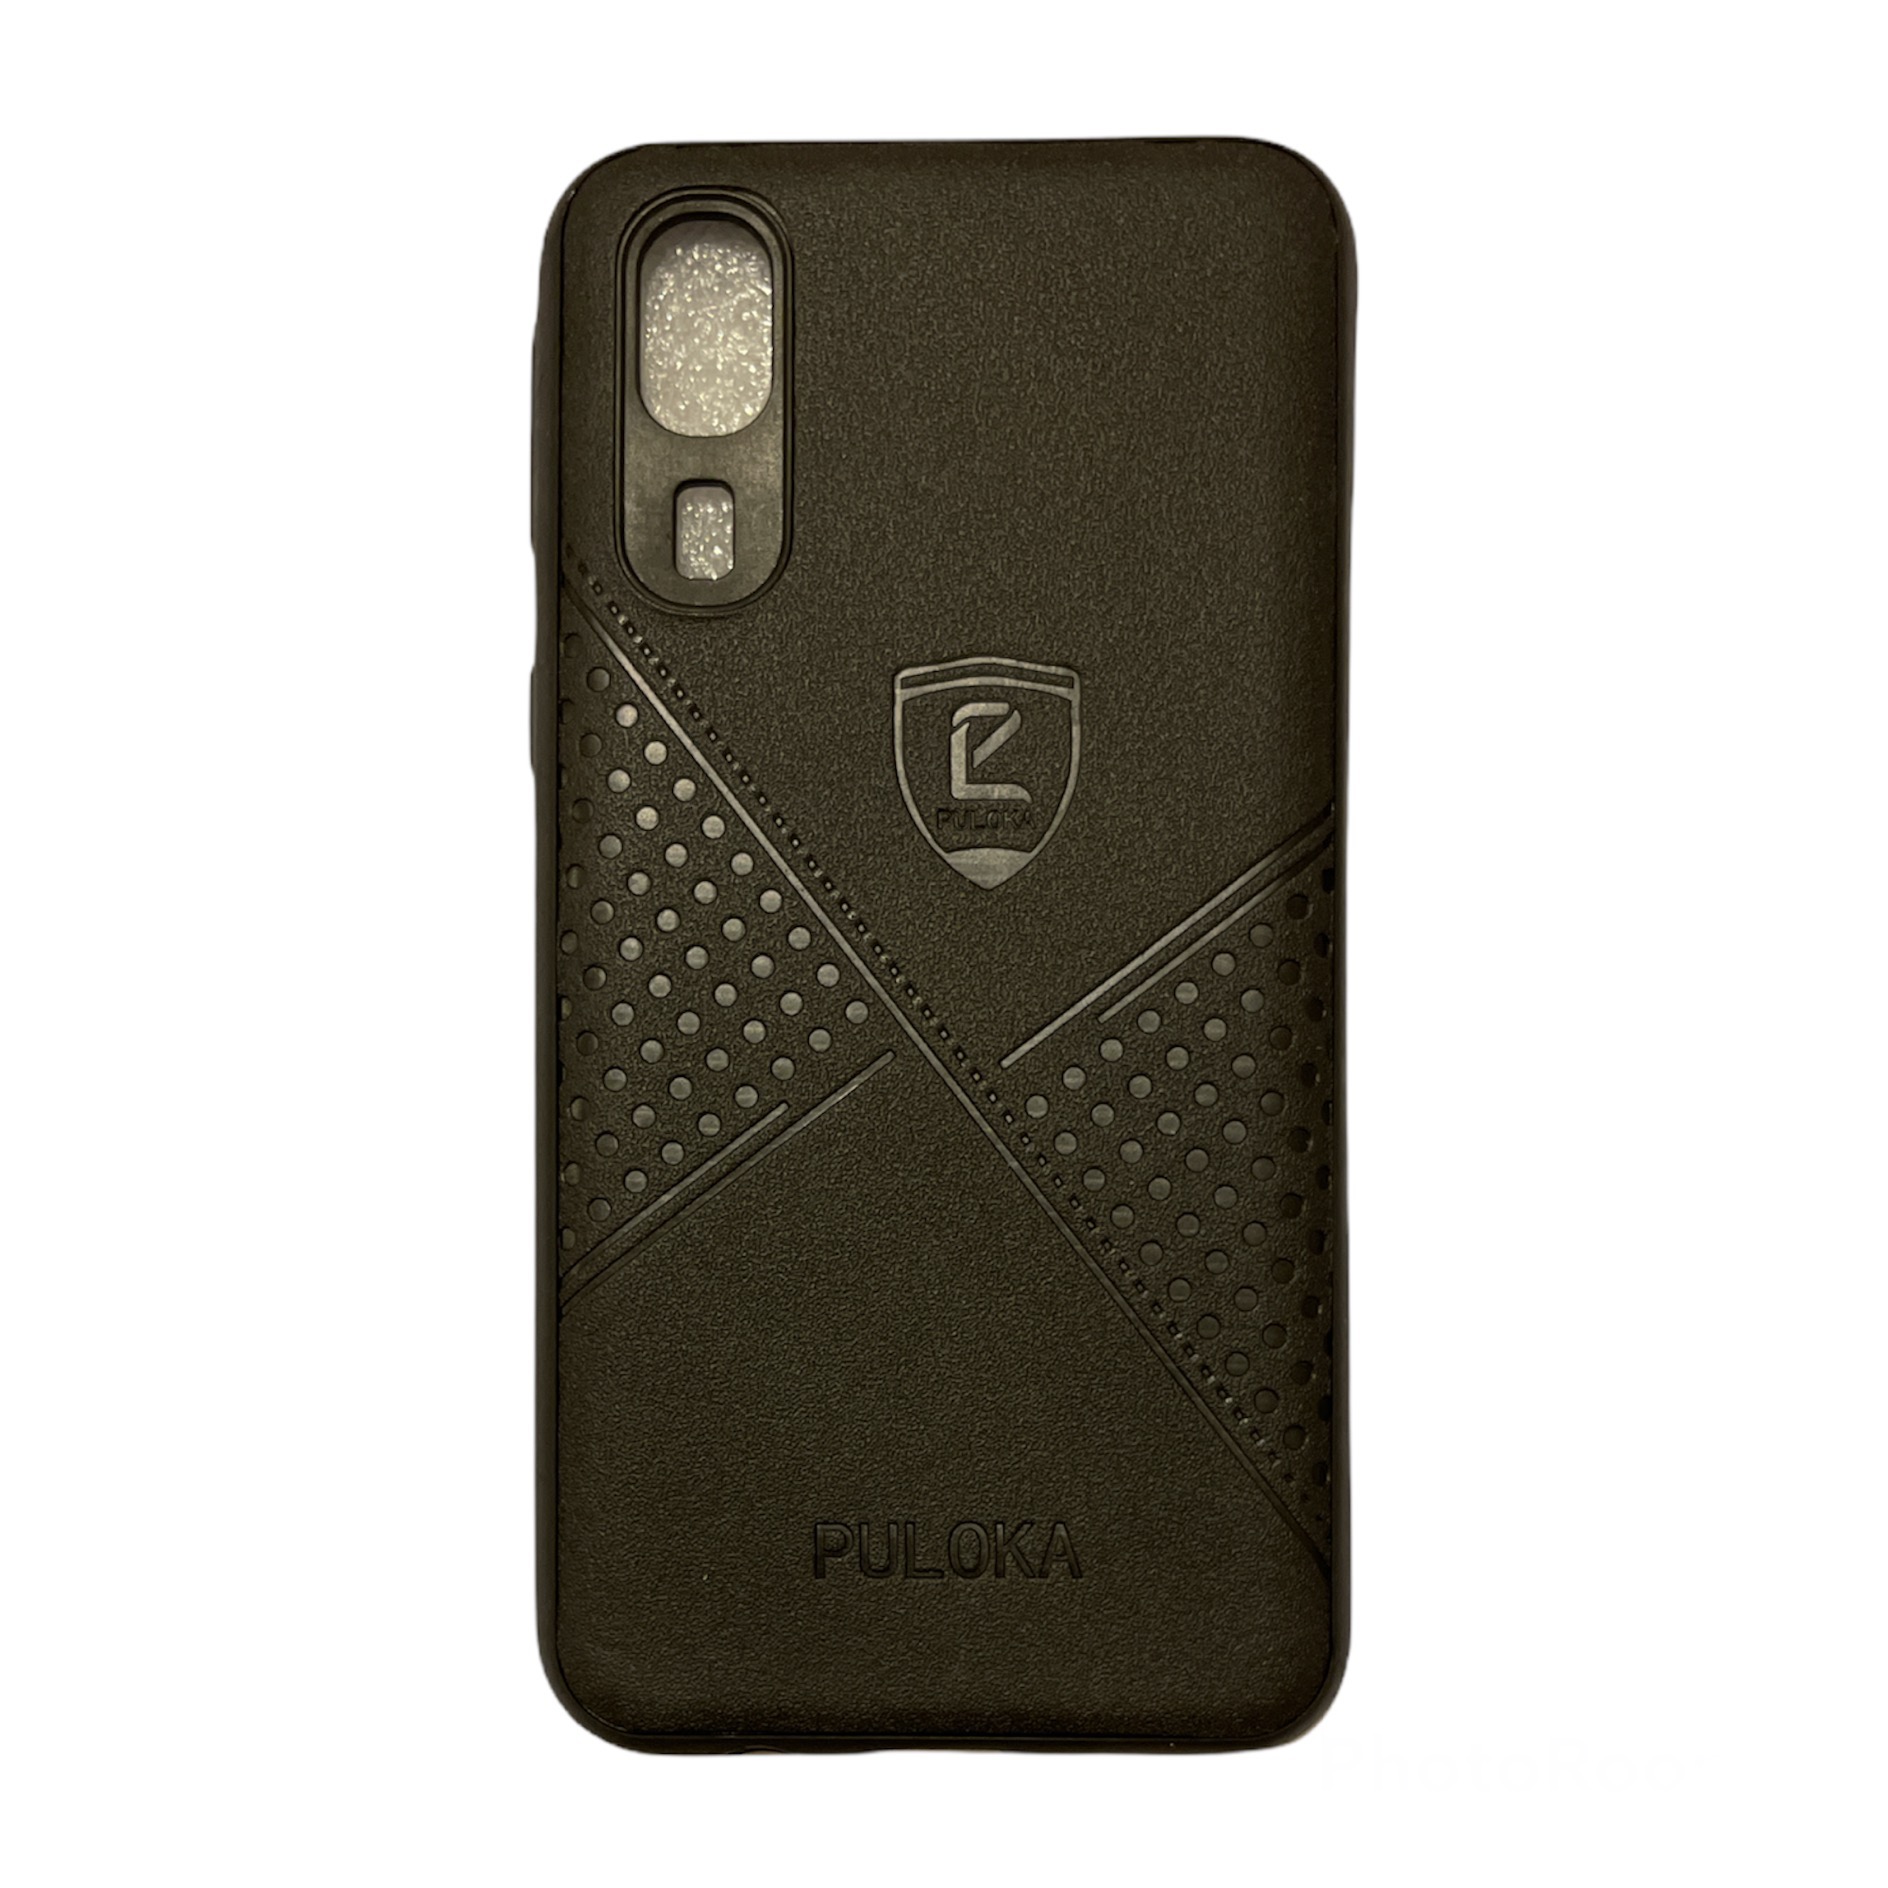 کاور پولوکا مدل d3 مناسب برای گوشی موبایل سامسونگ Galaxy A2 Core